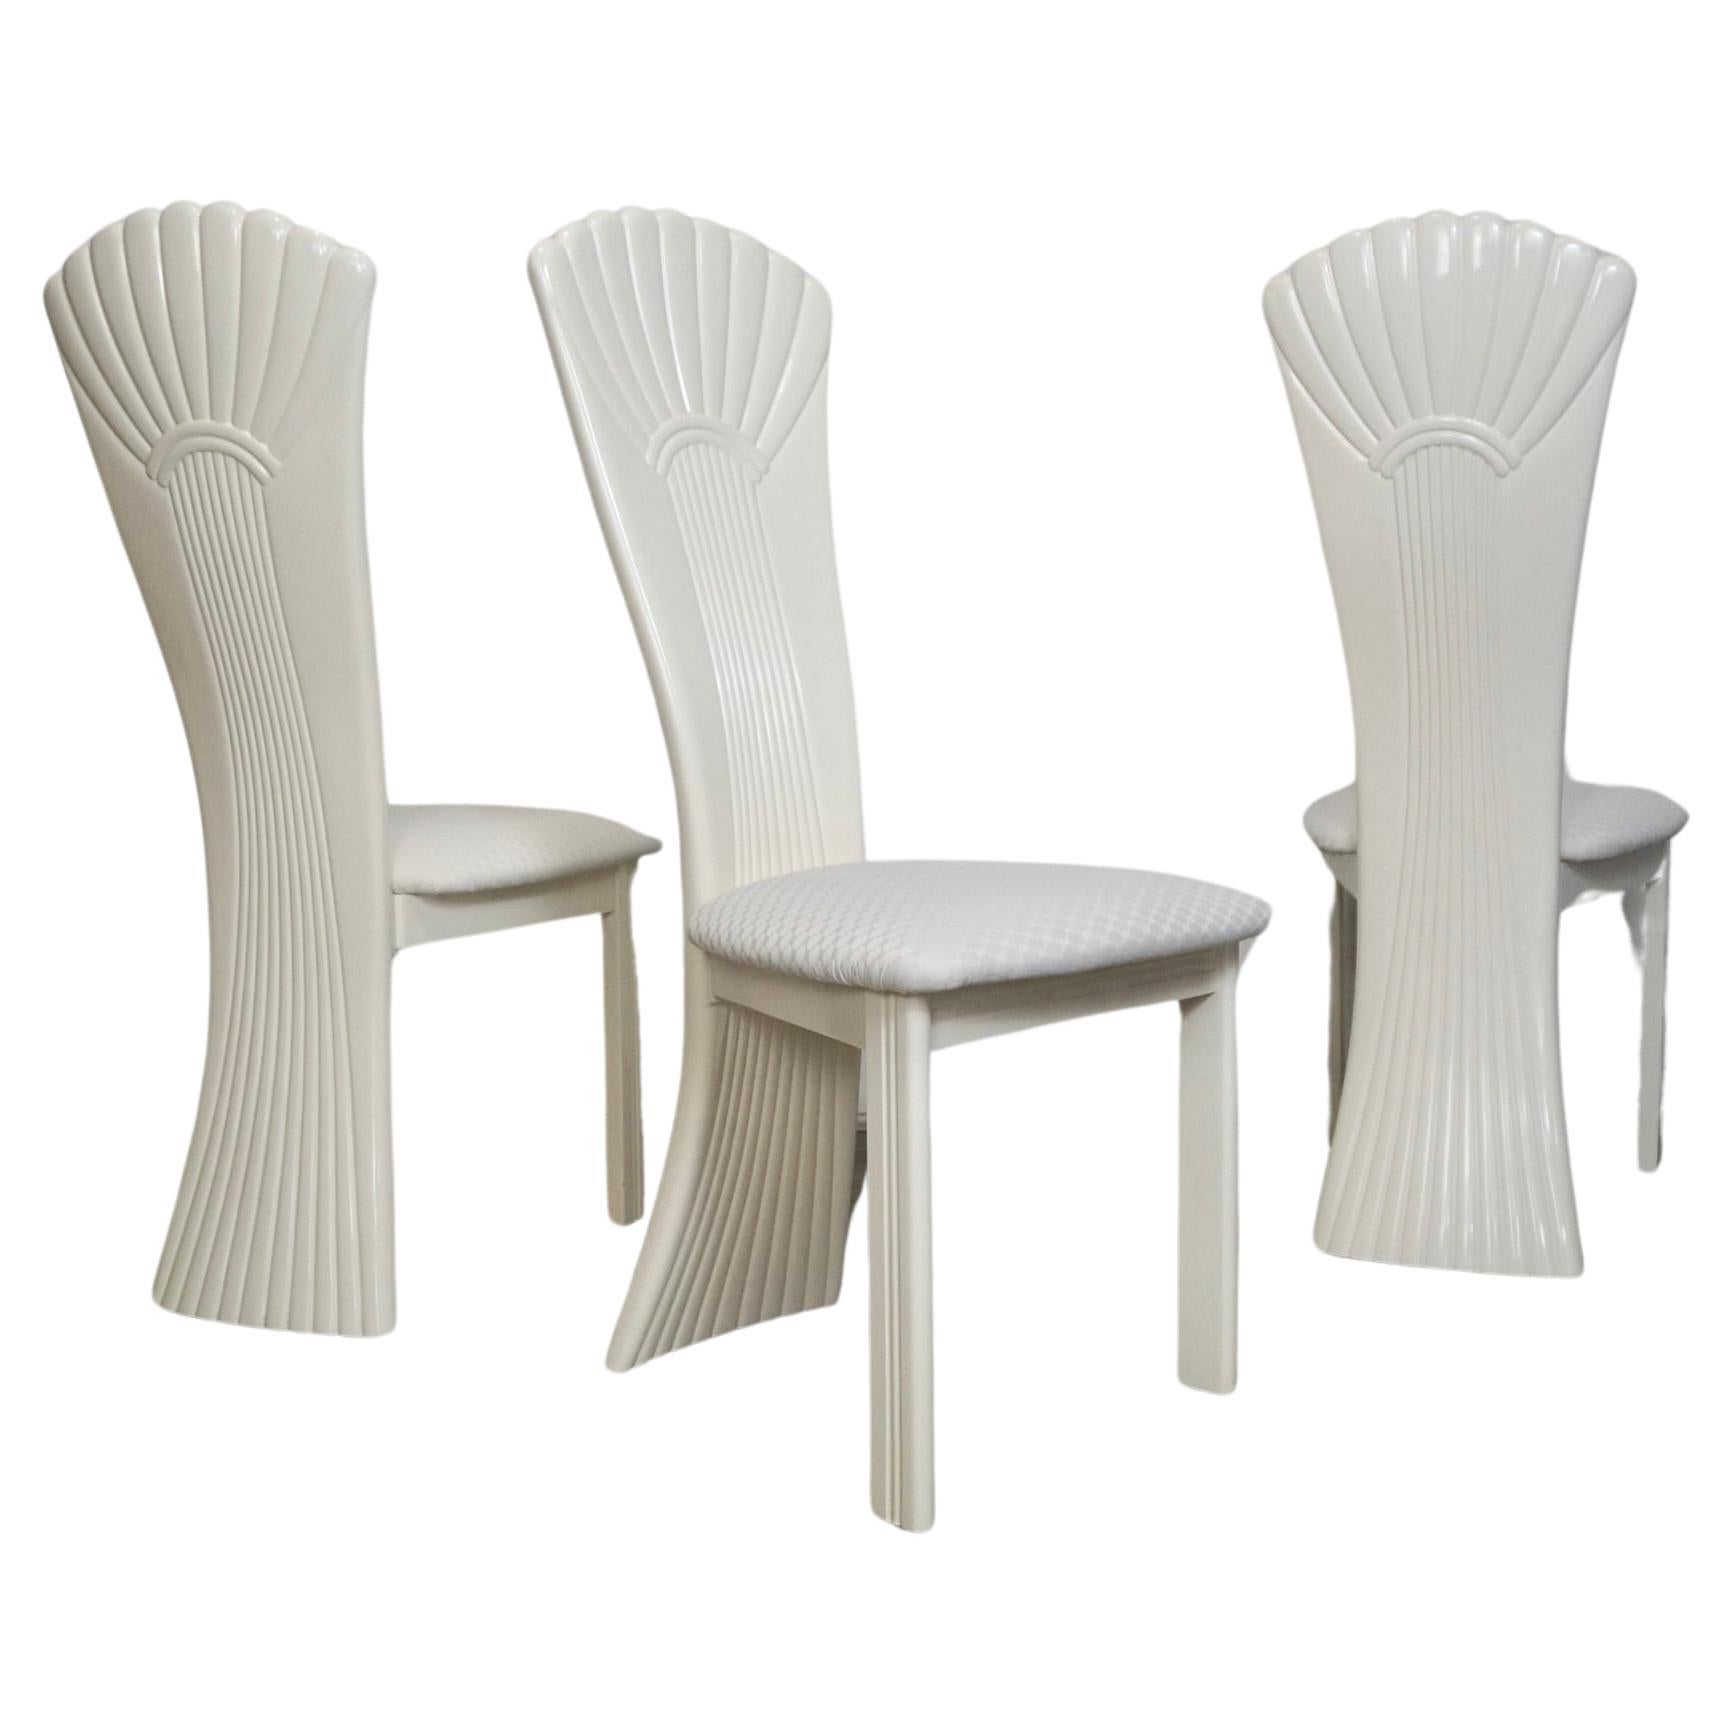 1980's Italian Postmodern Art Deco Najarian Dining Chairs - Set of 3 For Sale